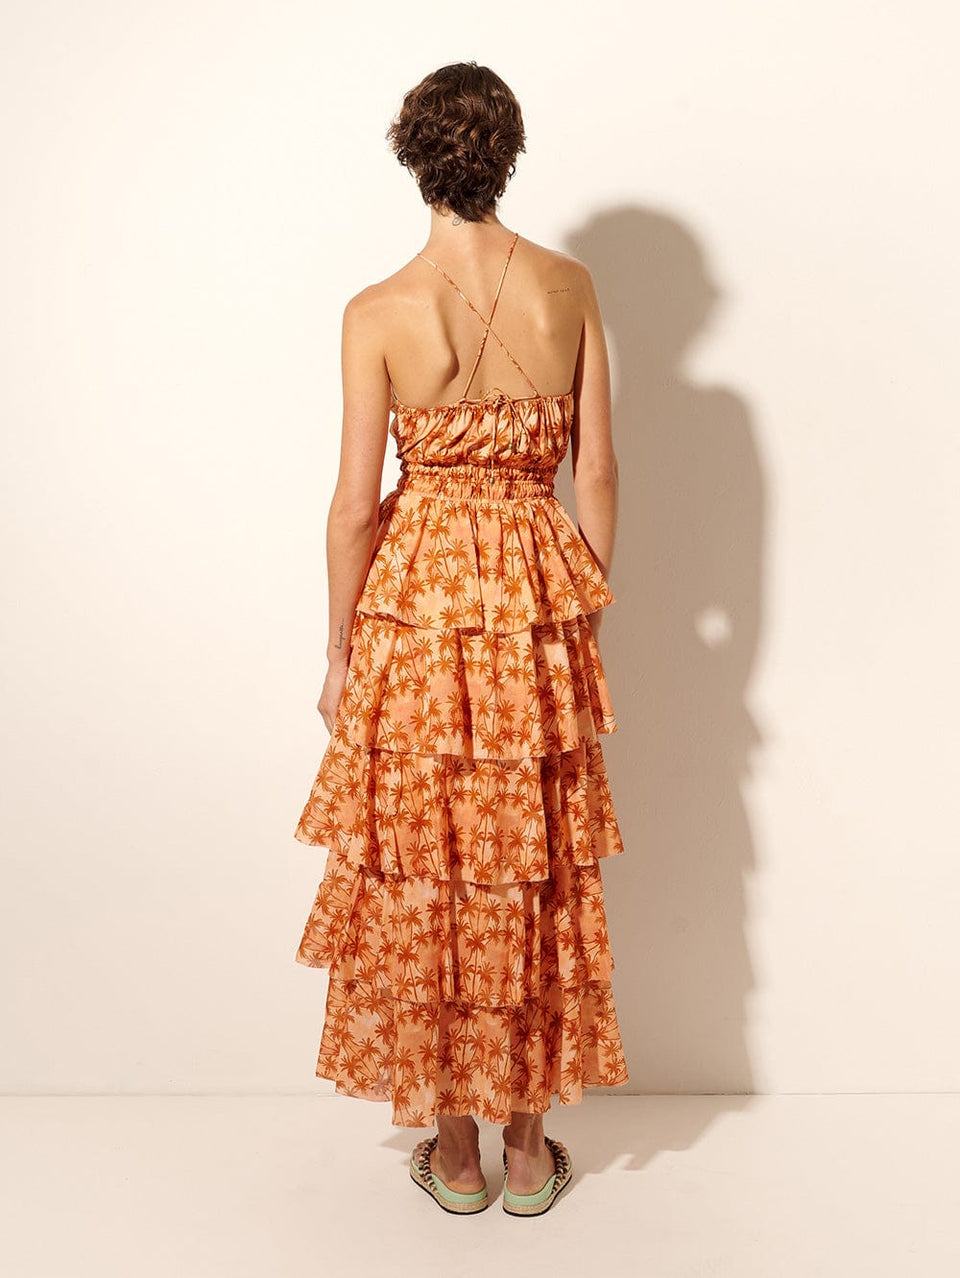 Leilani Maxi Dress KIVARI | Model wears bronze and peach palm printed maxi dress back view